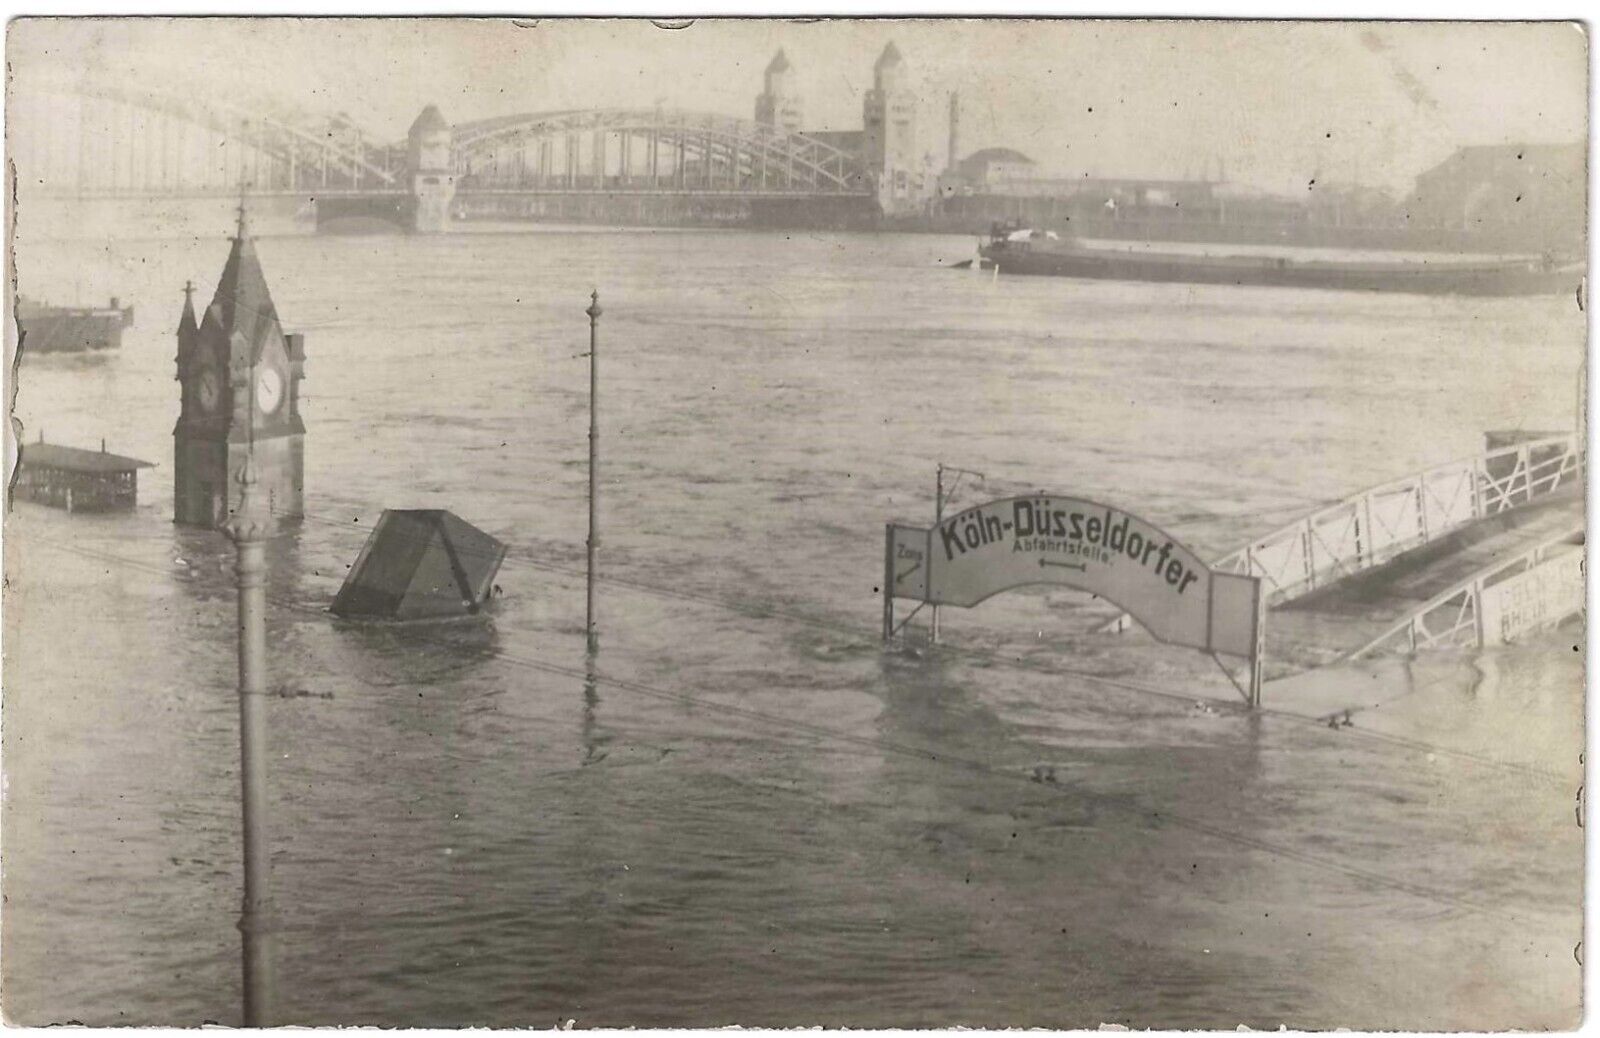 Rhine River Flood Scene, RPCC, with Koln Dusseldorfer Dock Sign, Cologne Germany